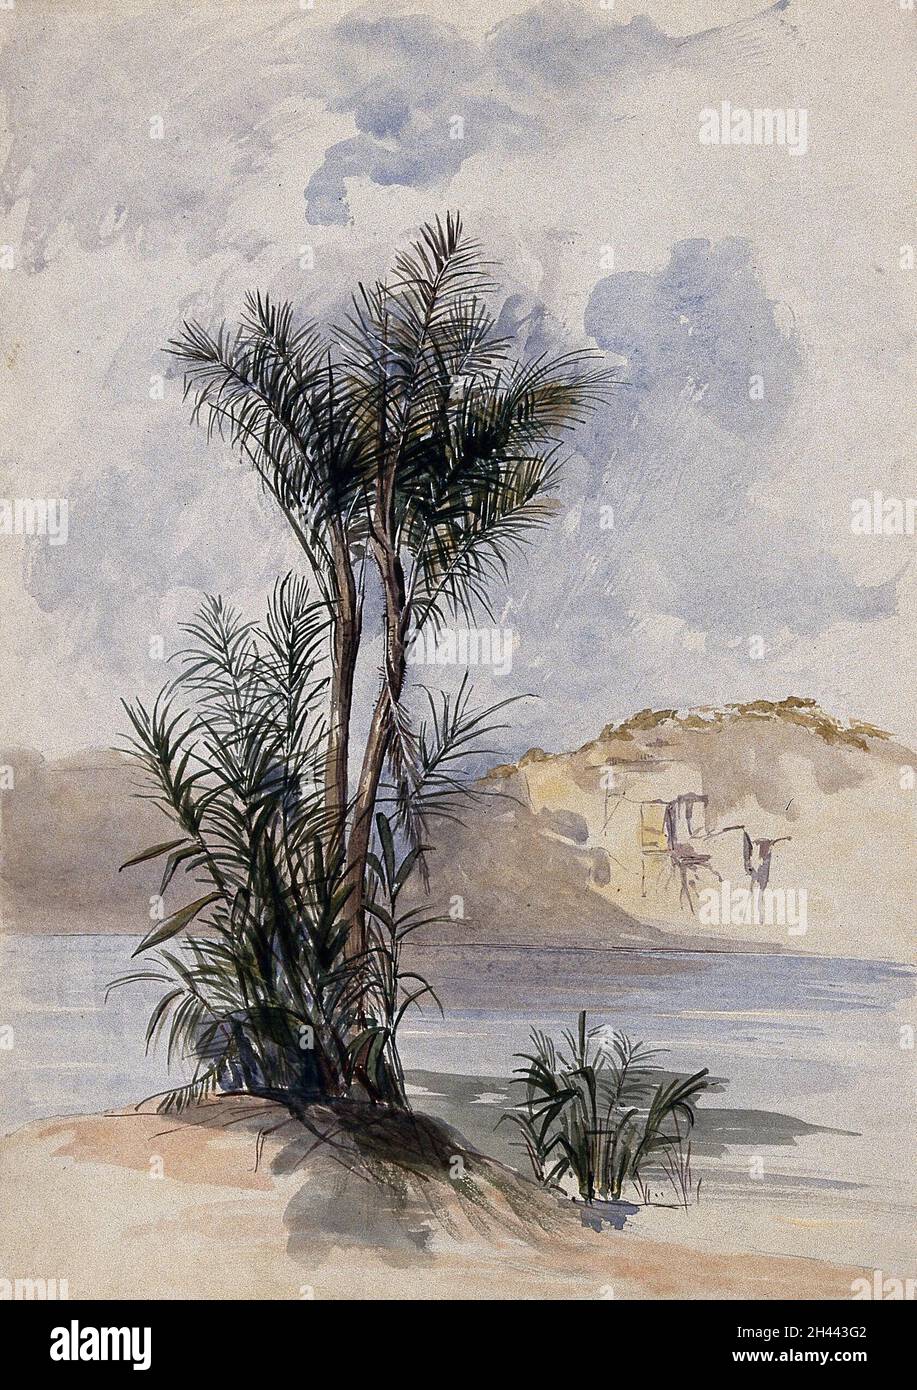 A jauari palm tree (Astrocaryum jauari) growing on a river bank. Watercolor after C. Goodall, 1846. Stock Photo